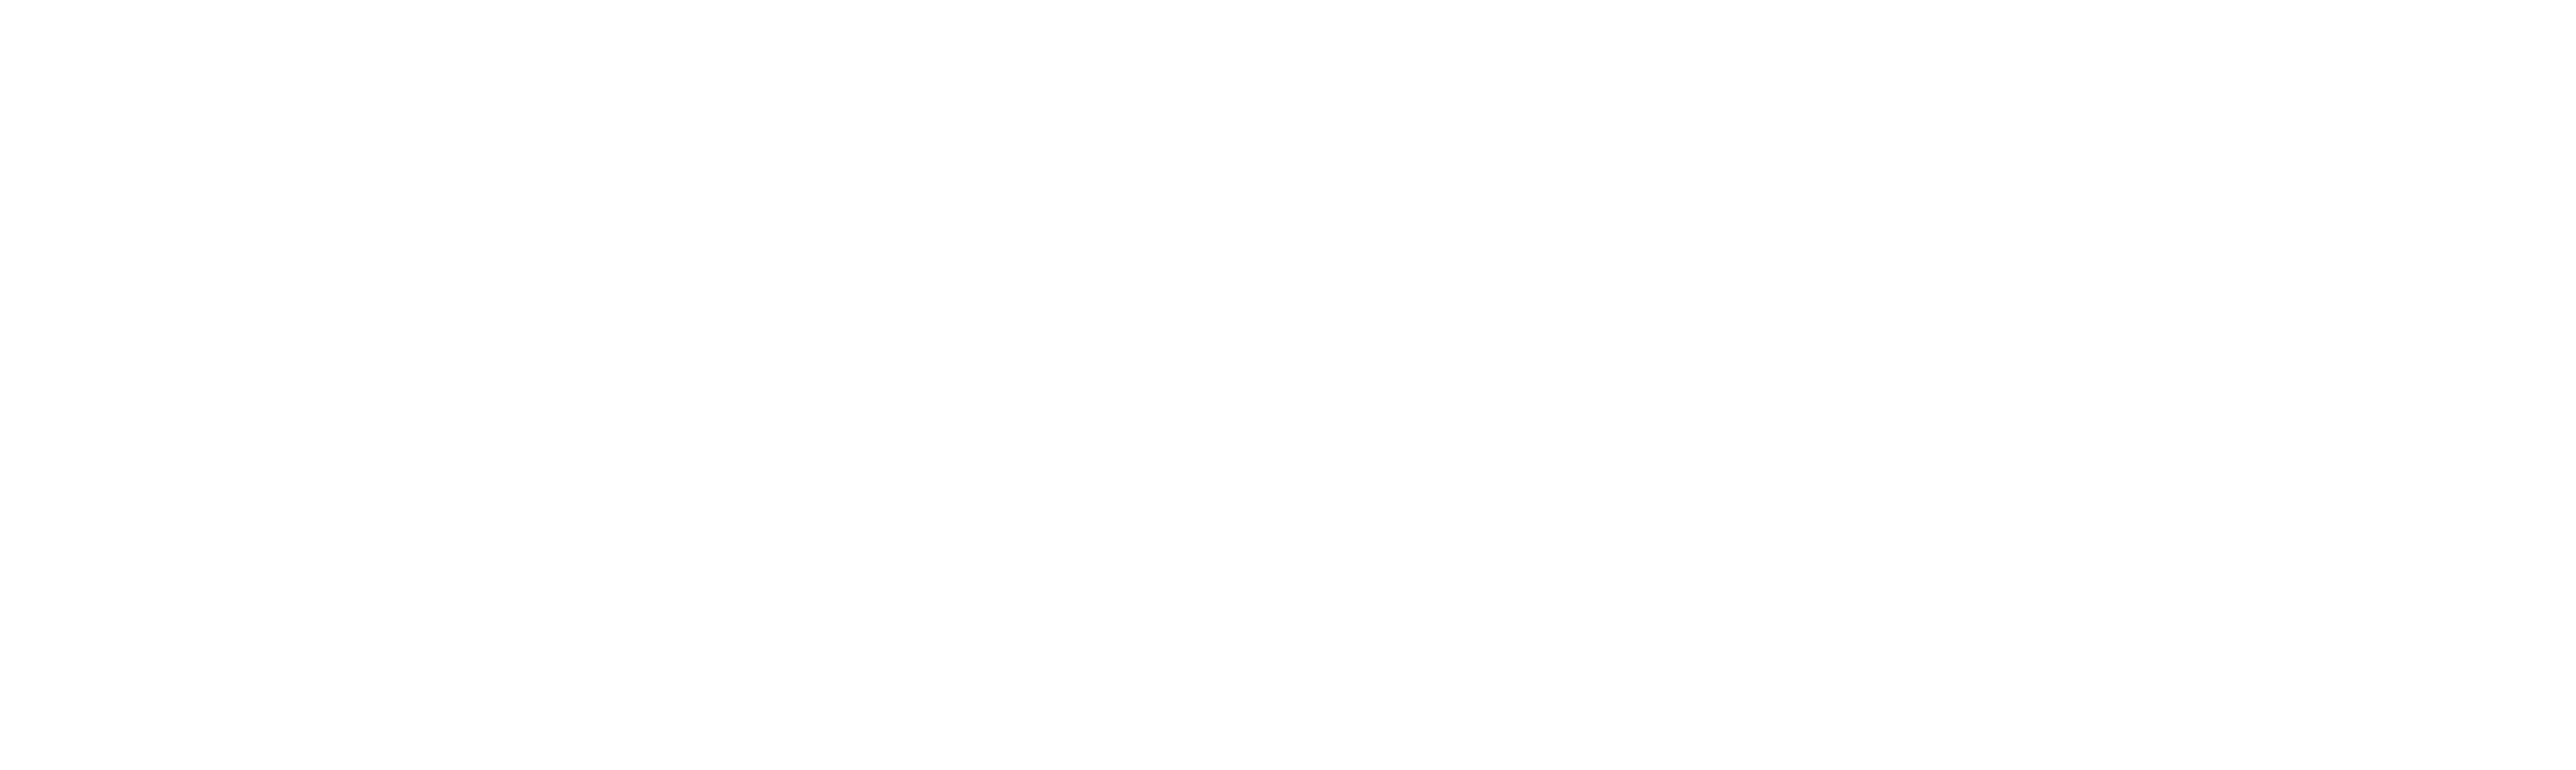 Ripe Watch Bands